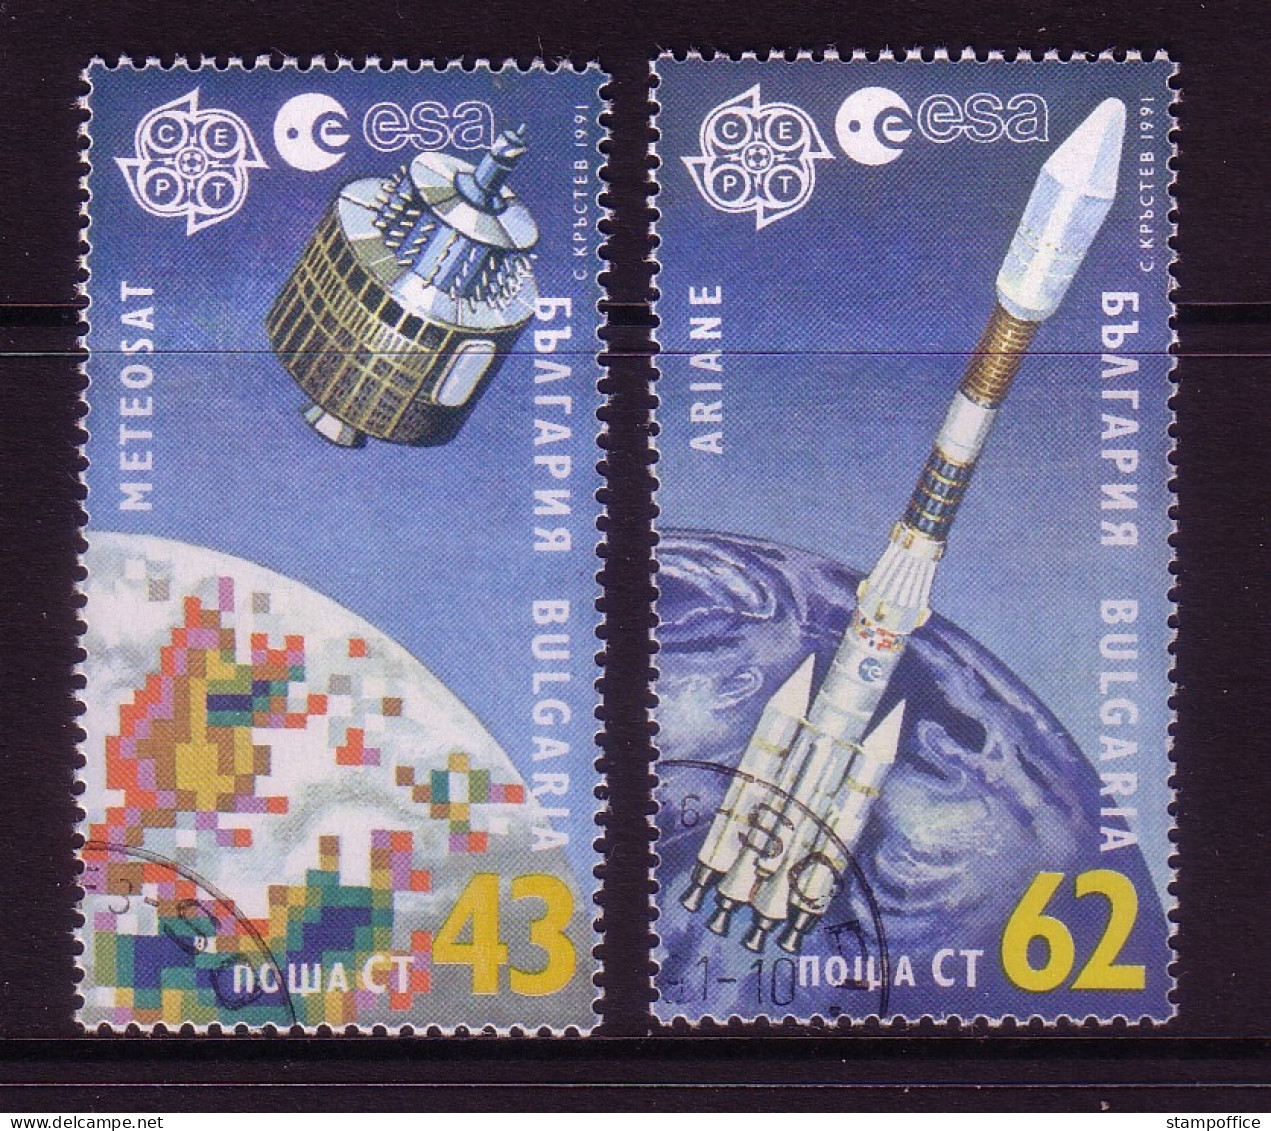 BULGARIEN MI-NR. 3901-3902 O EUROPA 1991 - EUROPÄISCHE WELTRAUMFAHRT - 1991